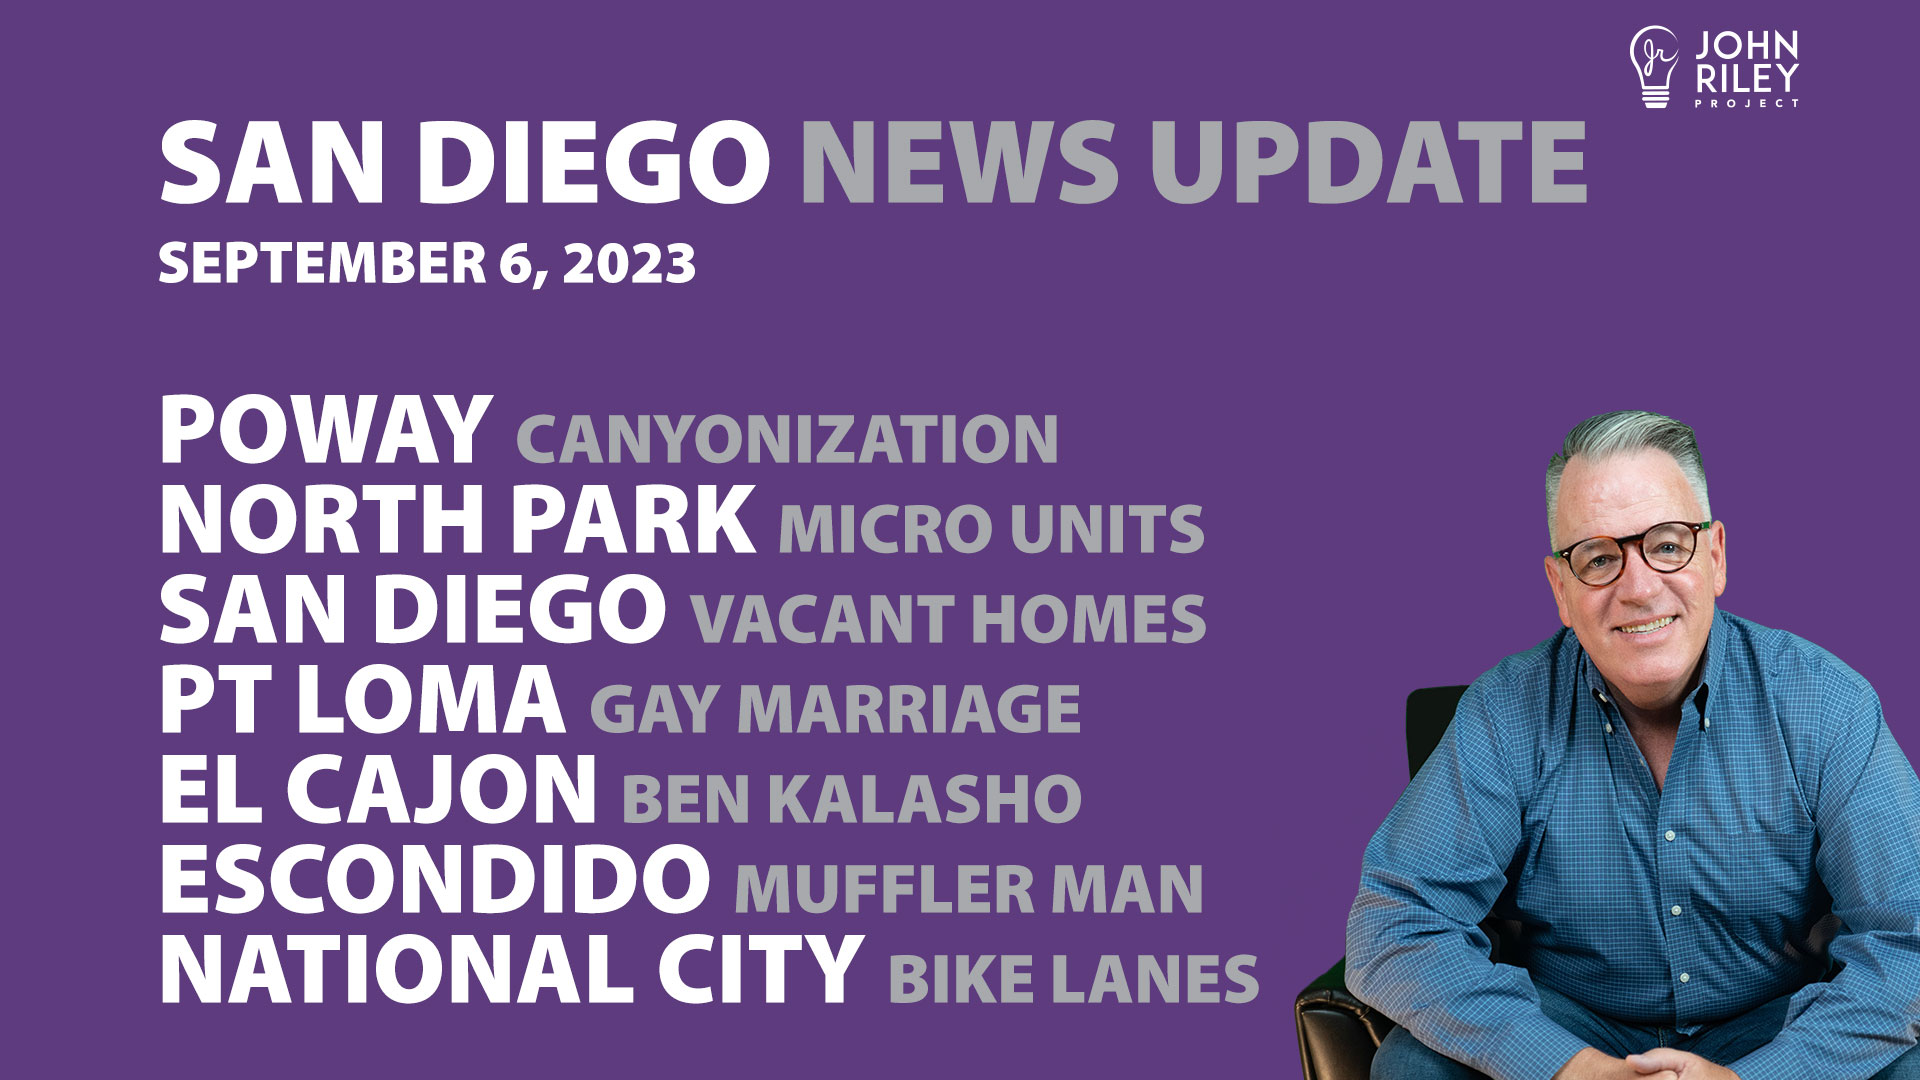 John Riley discusses Poway Road Canyonization, San Diego Housing Crisis, Pt Loma Gay Marriage, Ben Kalasho